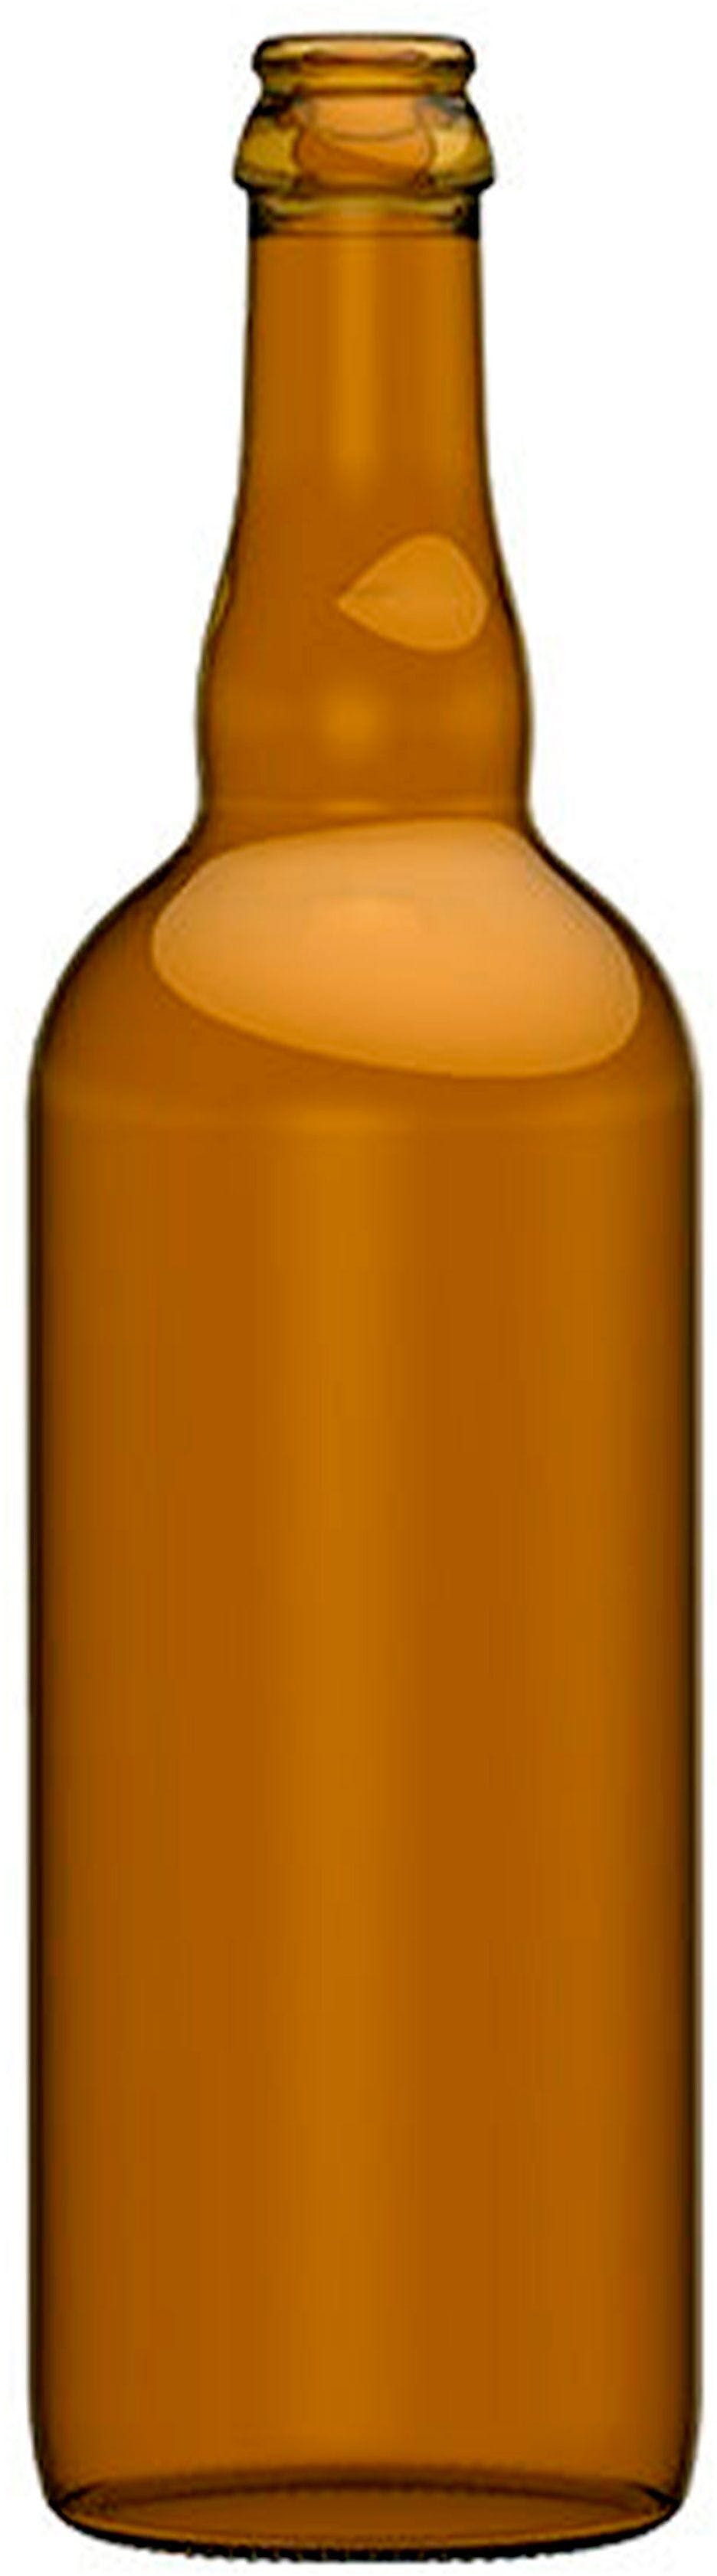 Bottle BIRRA  BELGIUM 750 ml Crown 26